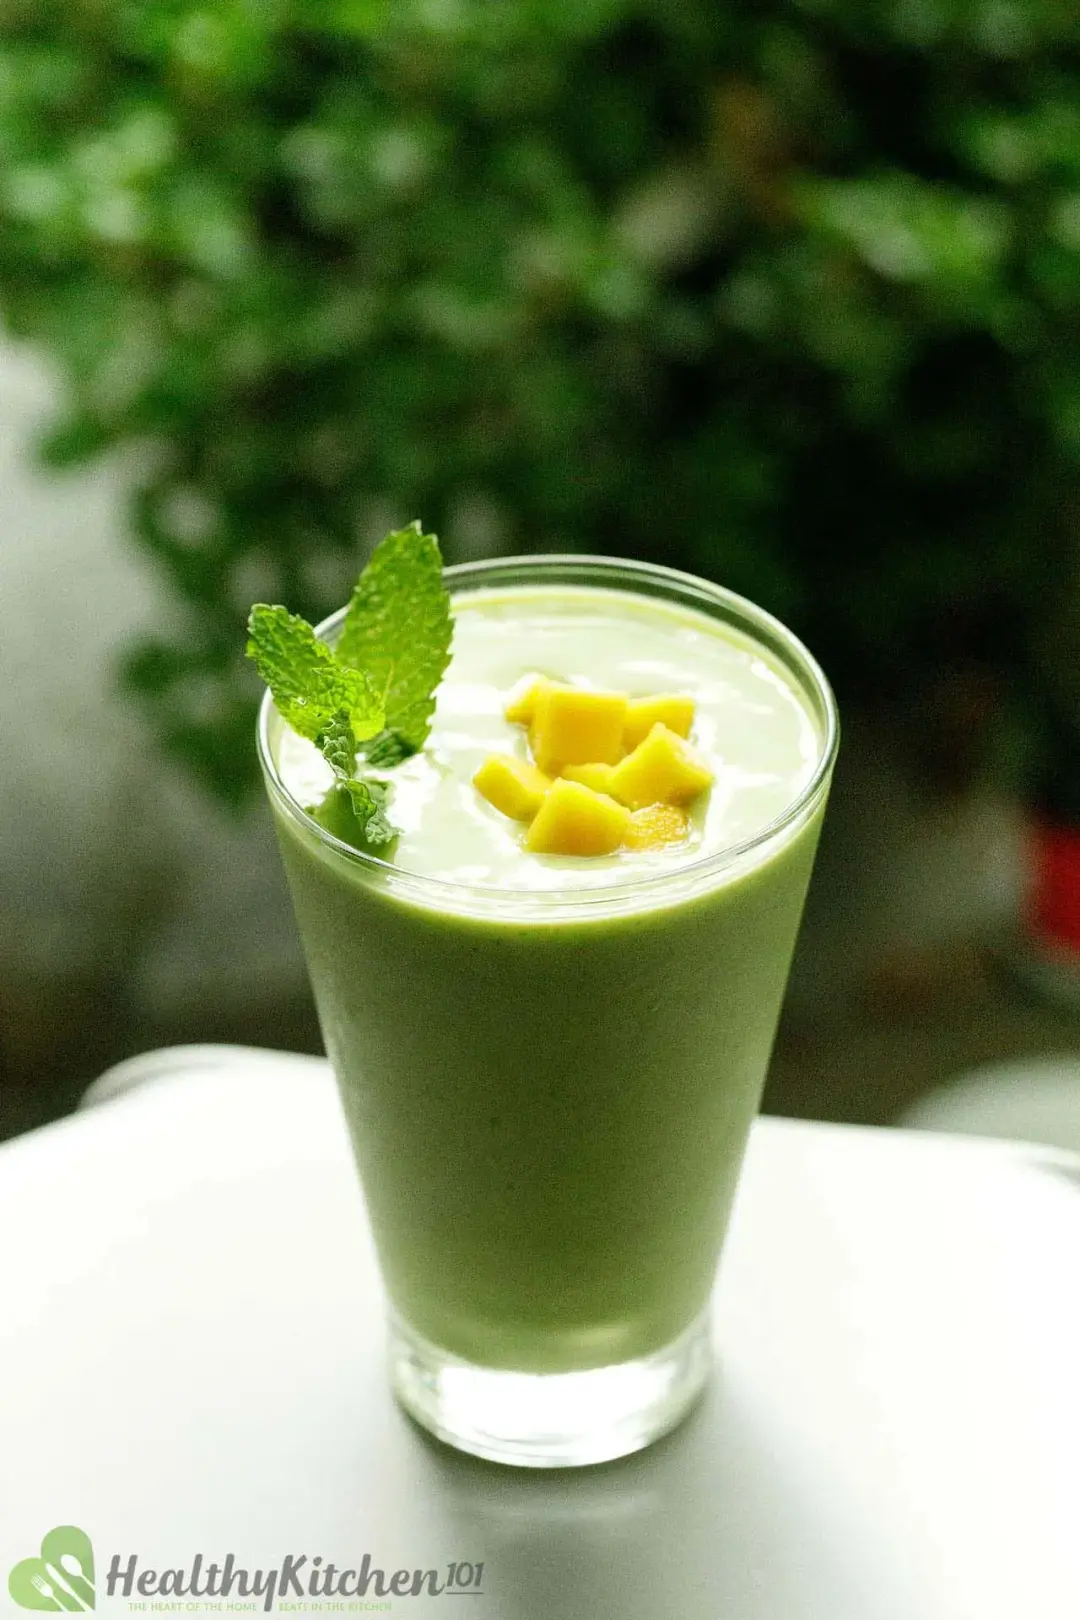 Mango Smoothie Recipe: A Creamy, Healthy Spinach & Apple Blend